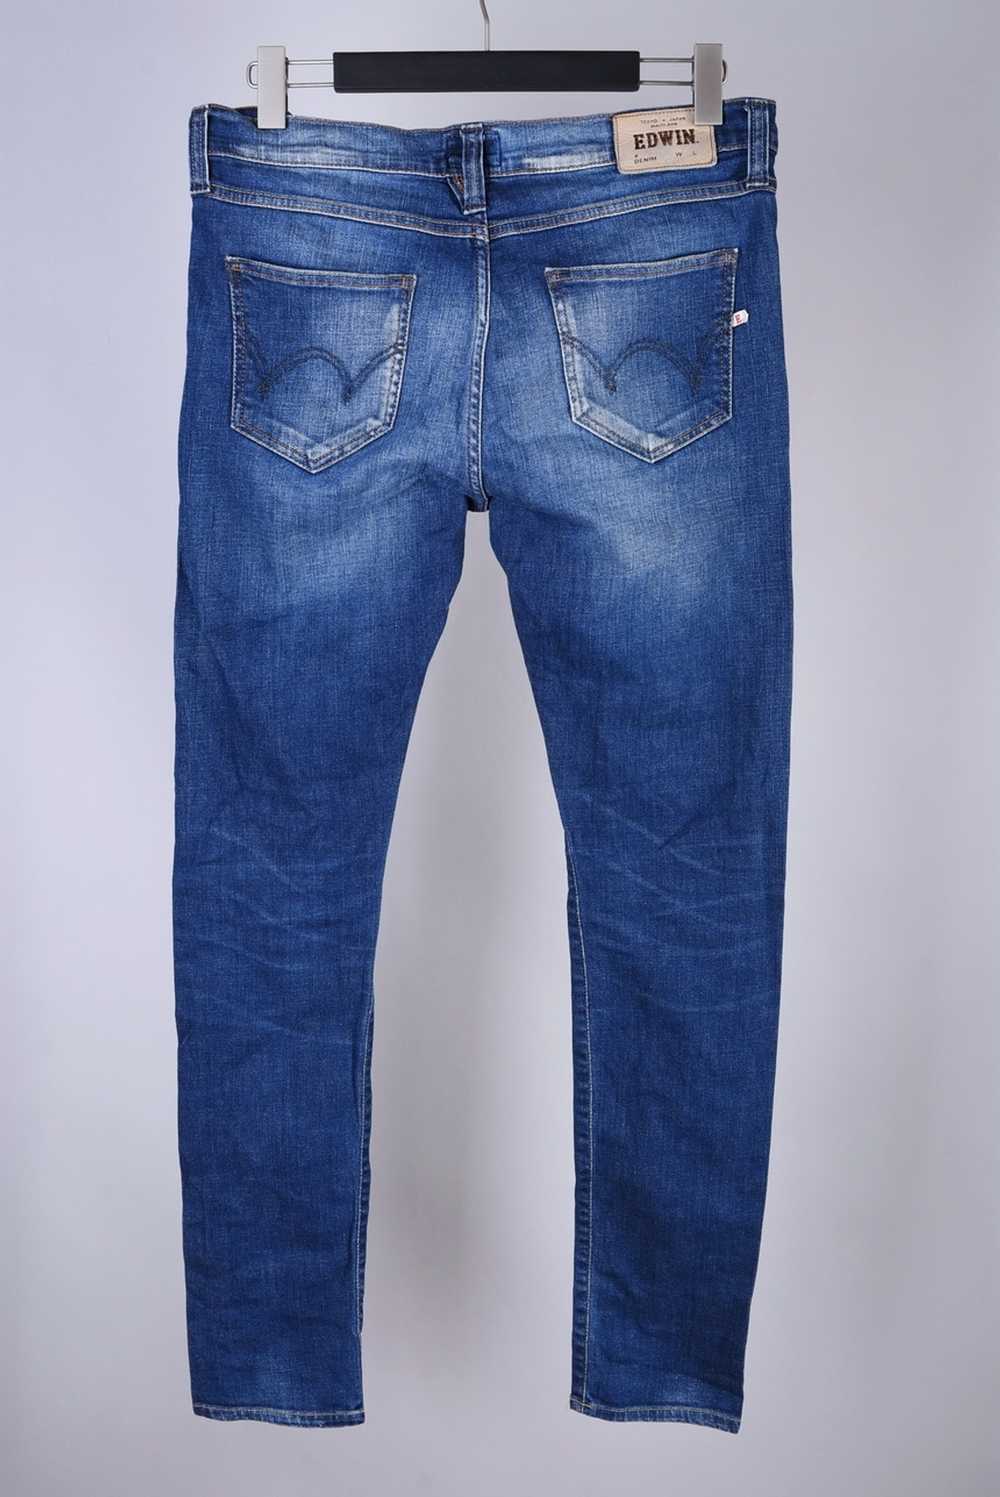 Edwin Edwin Ed-88 Slim Classic Jeans - image 4